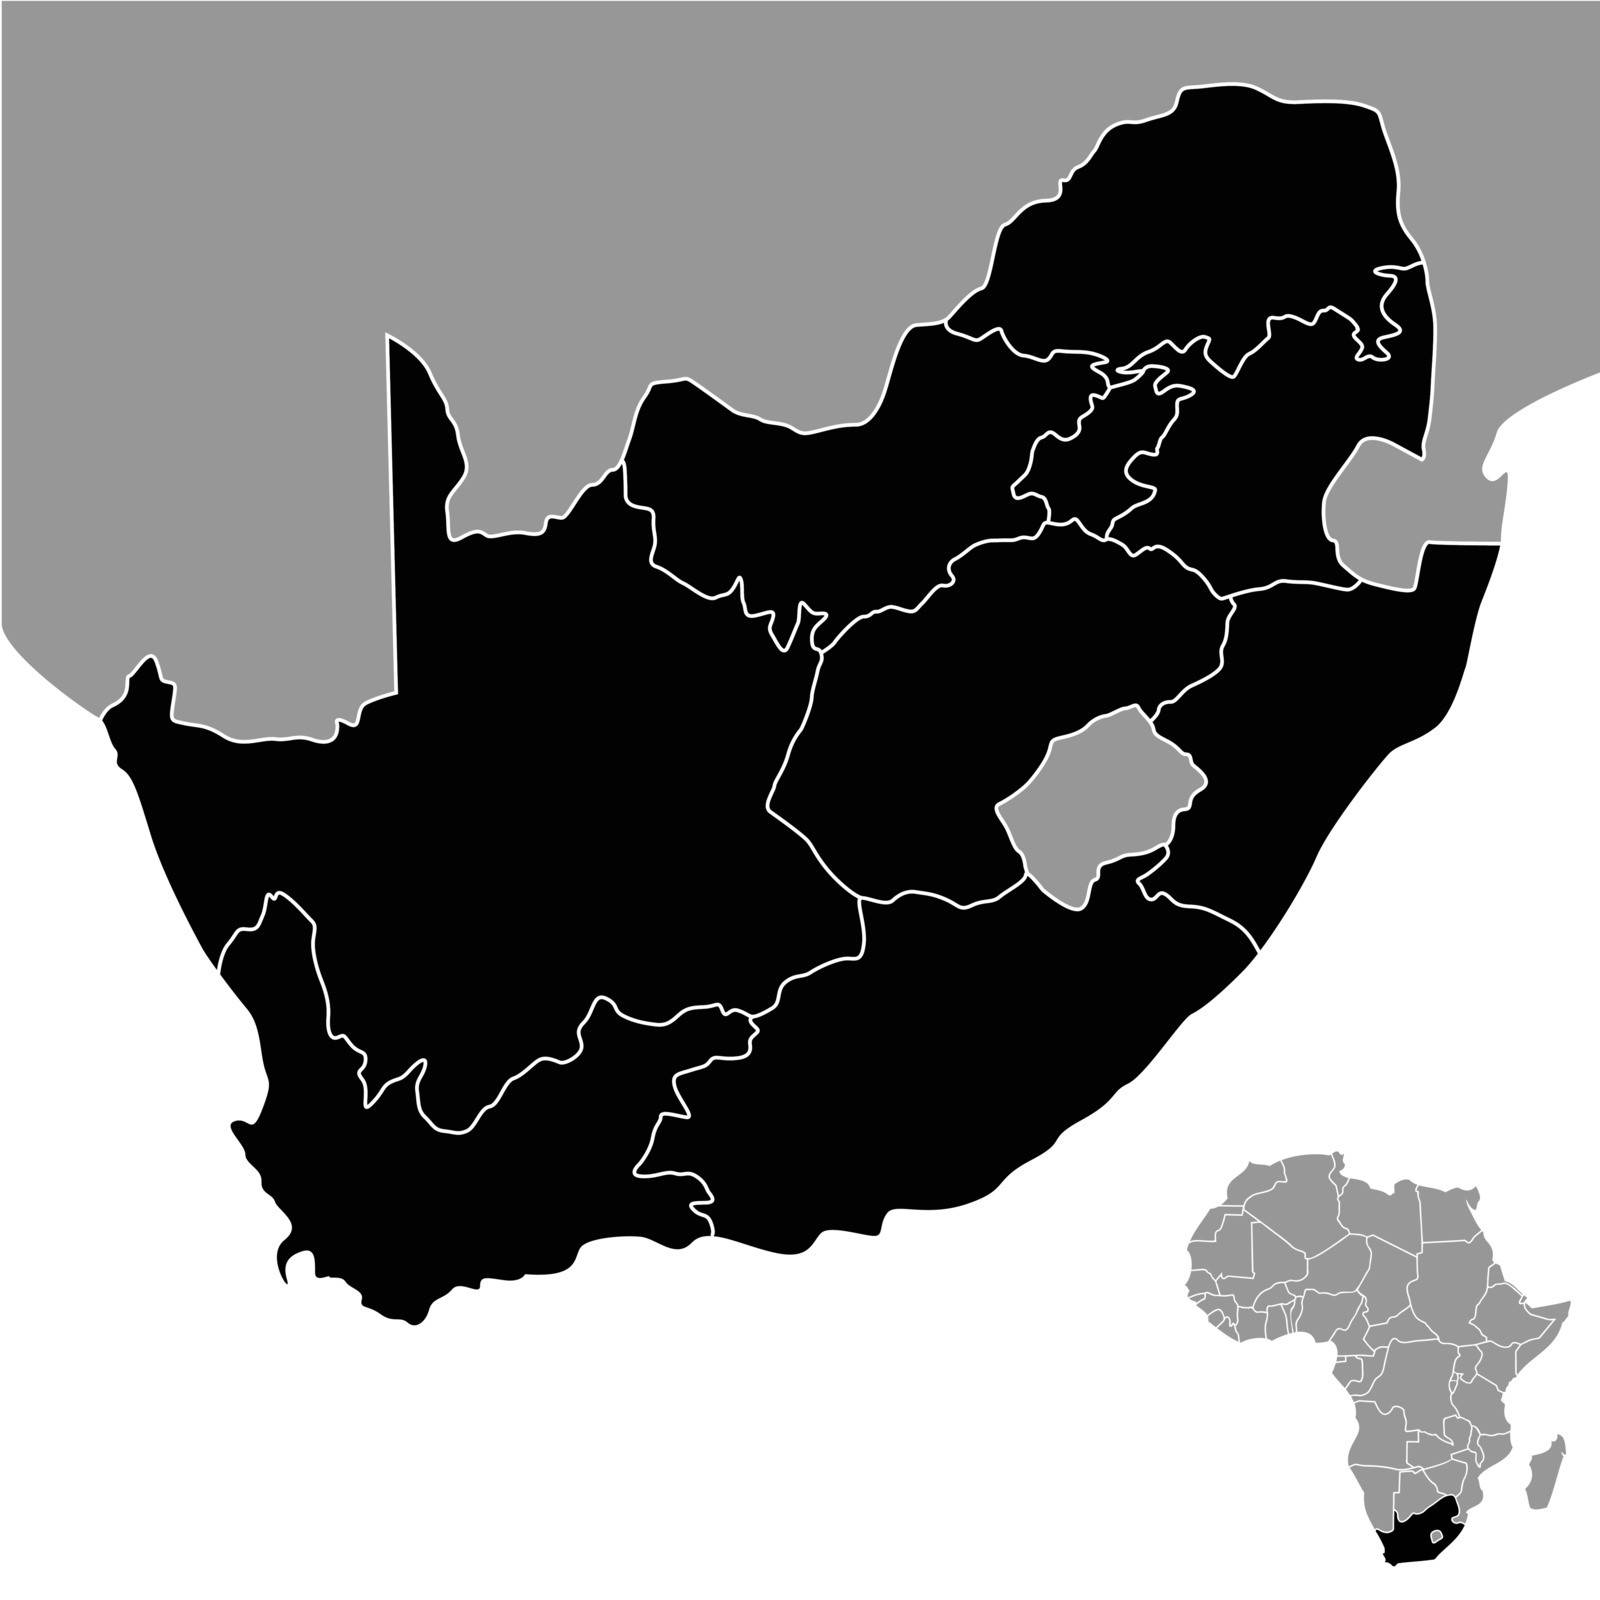 South Africa by emirsimsek